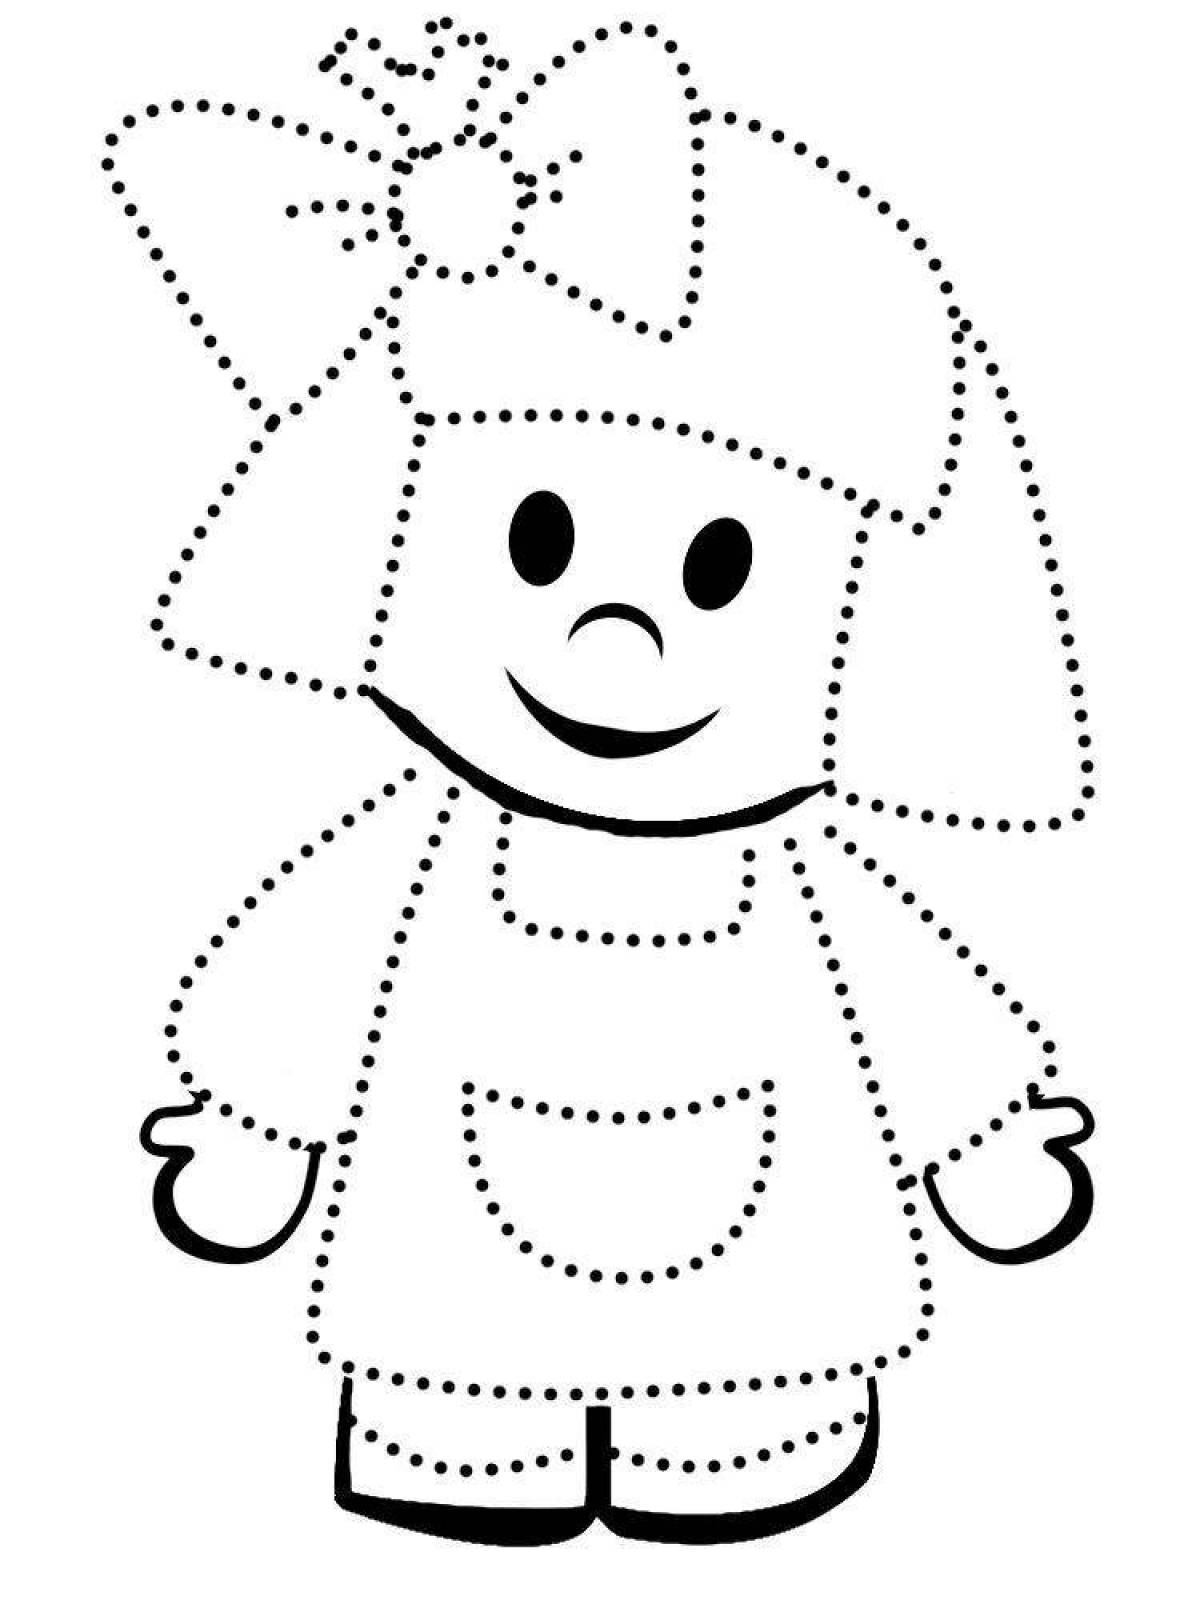 Polka dot fun coloring for preschoolers